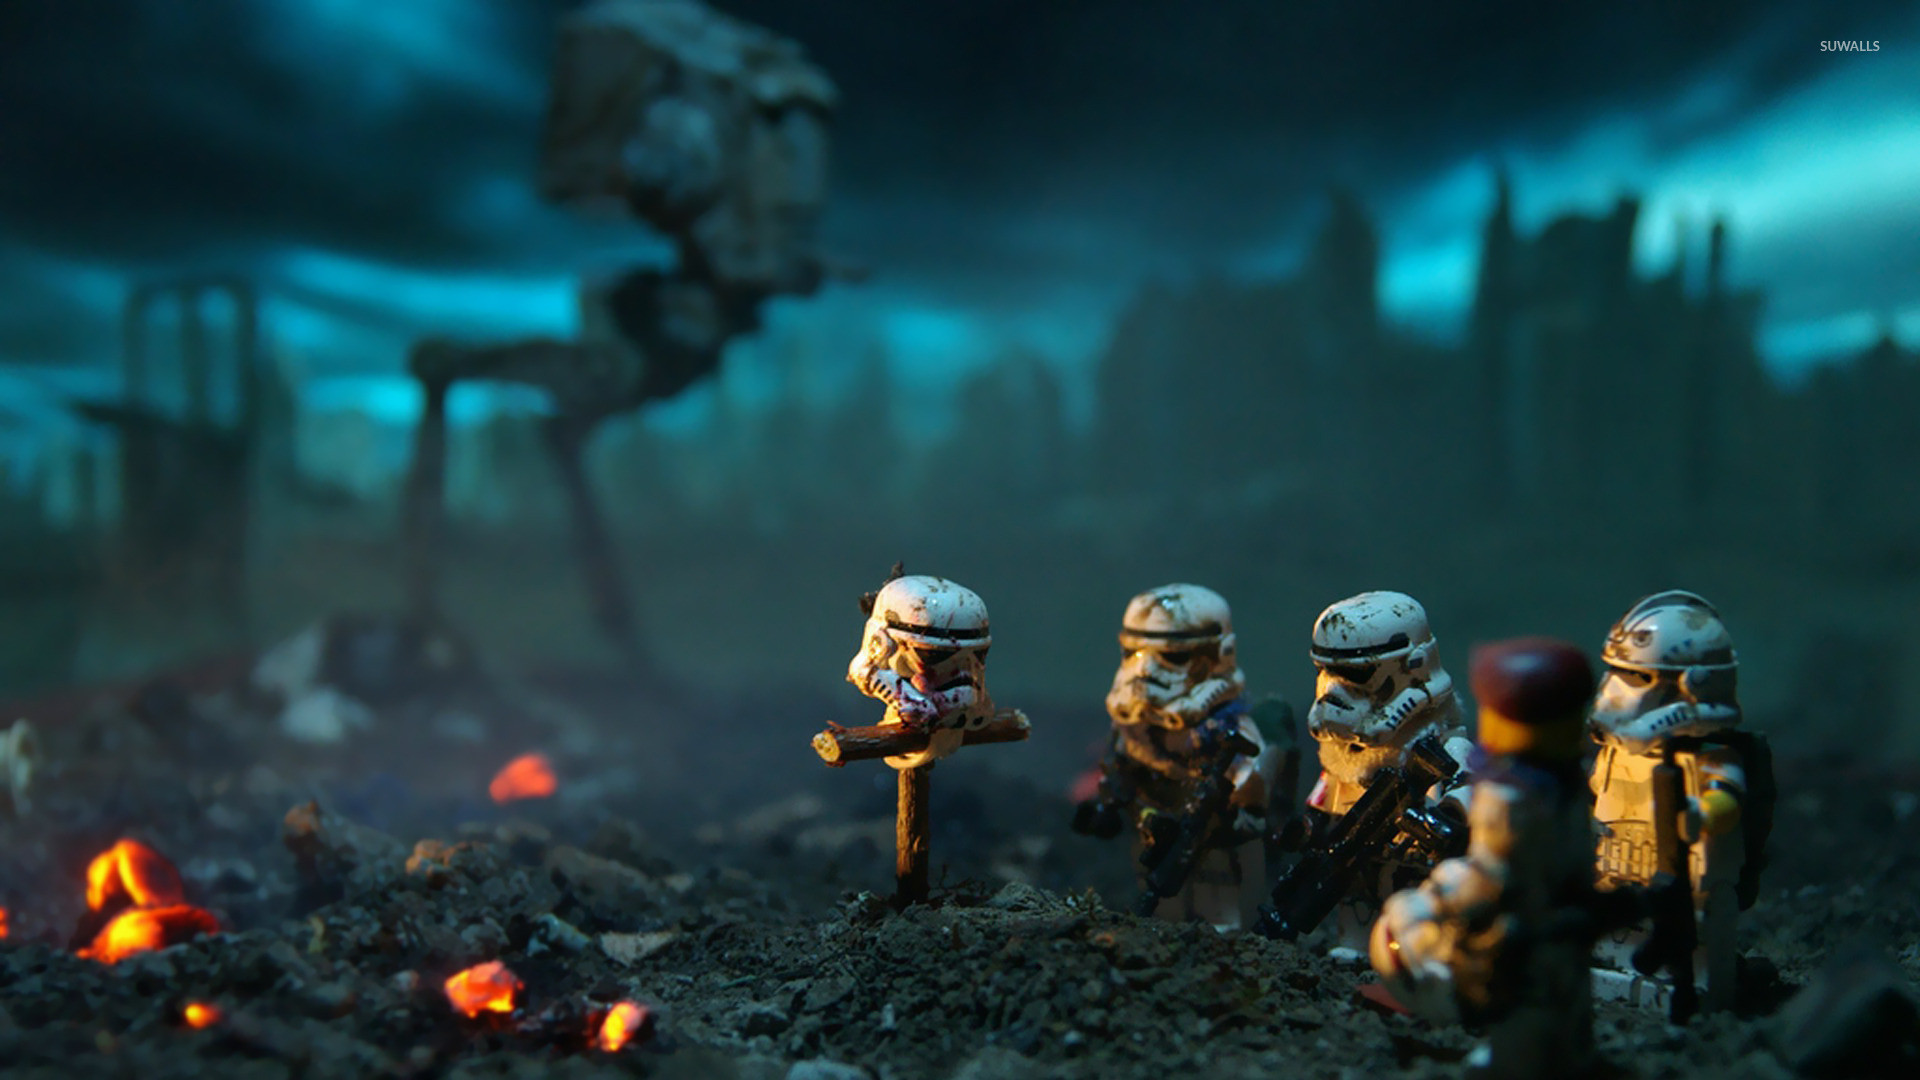 LEGO Stormtrooper burial wallpaper jpg